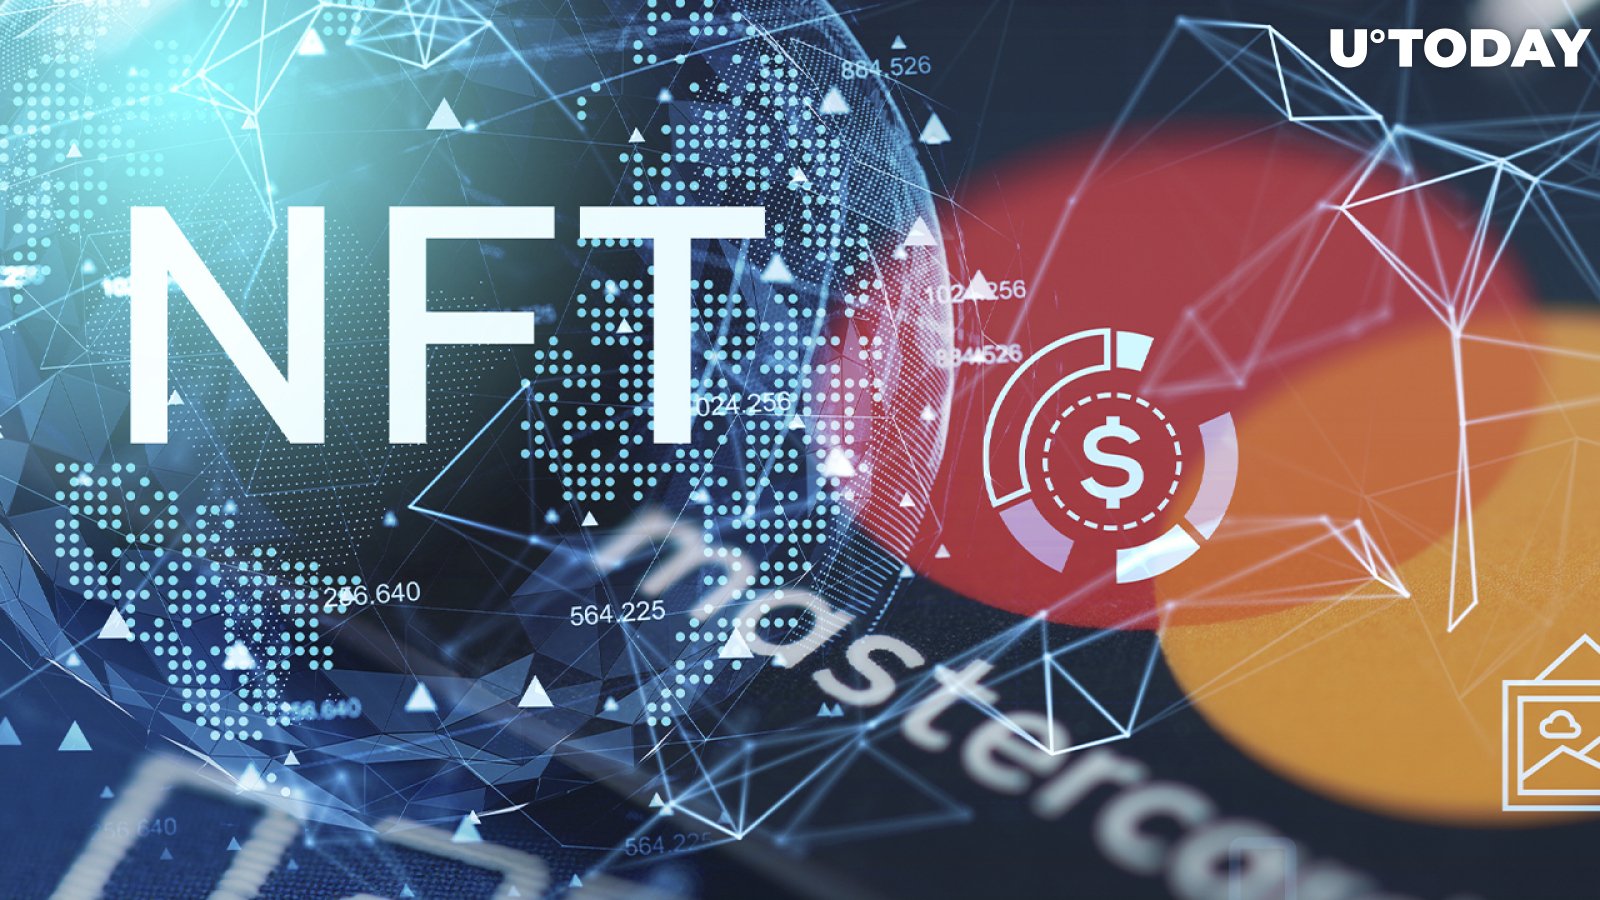 bitsCrunch NFT Platform Scores Partnership with Mastercard: Details